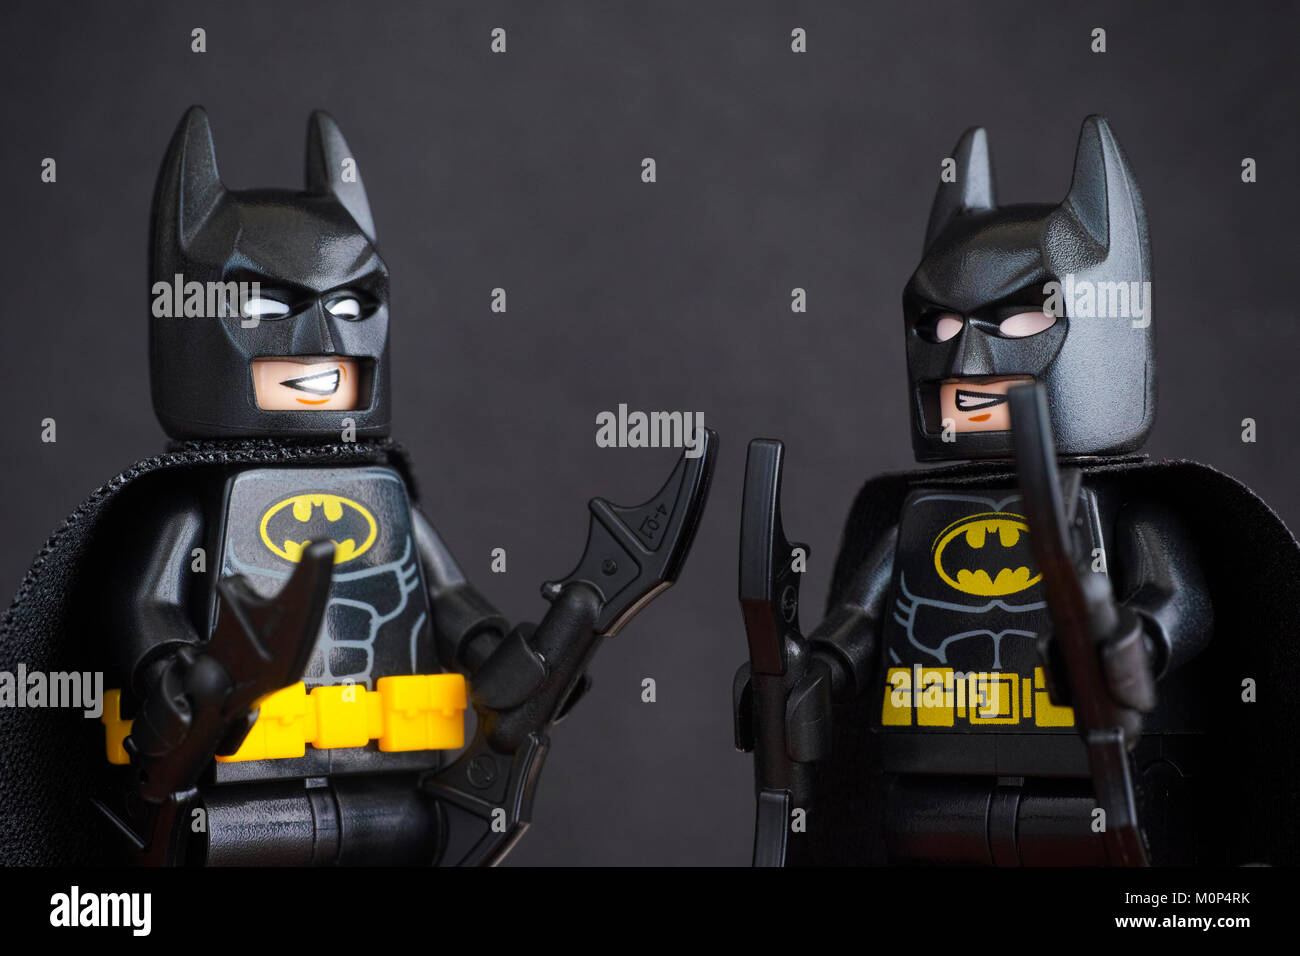 Batman minifigures hi-res stock photography and images - Alamy